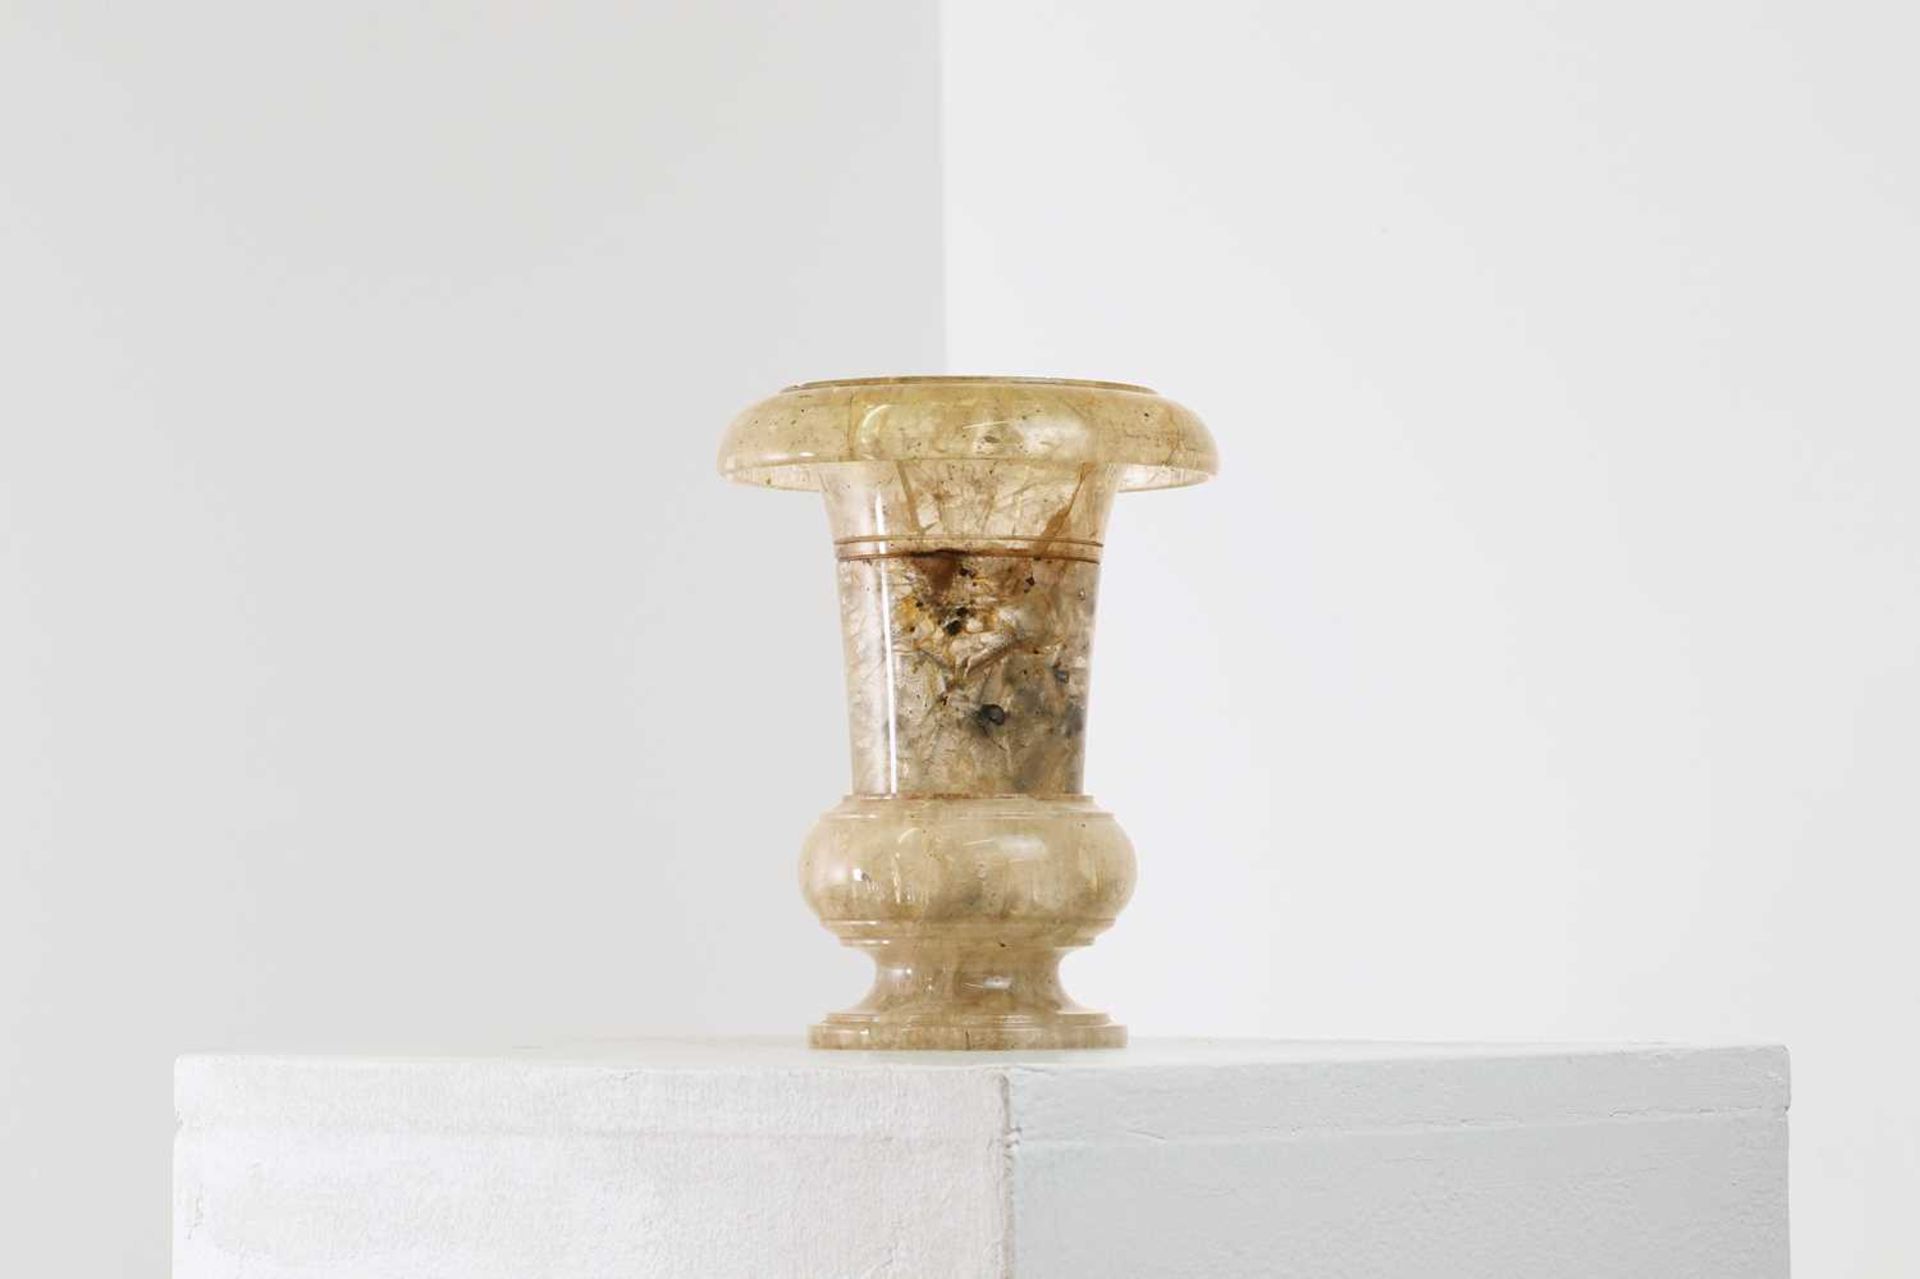 A fluorspar campana urn, - Image 2 of 23